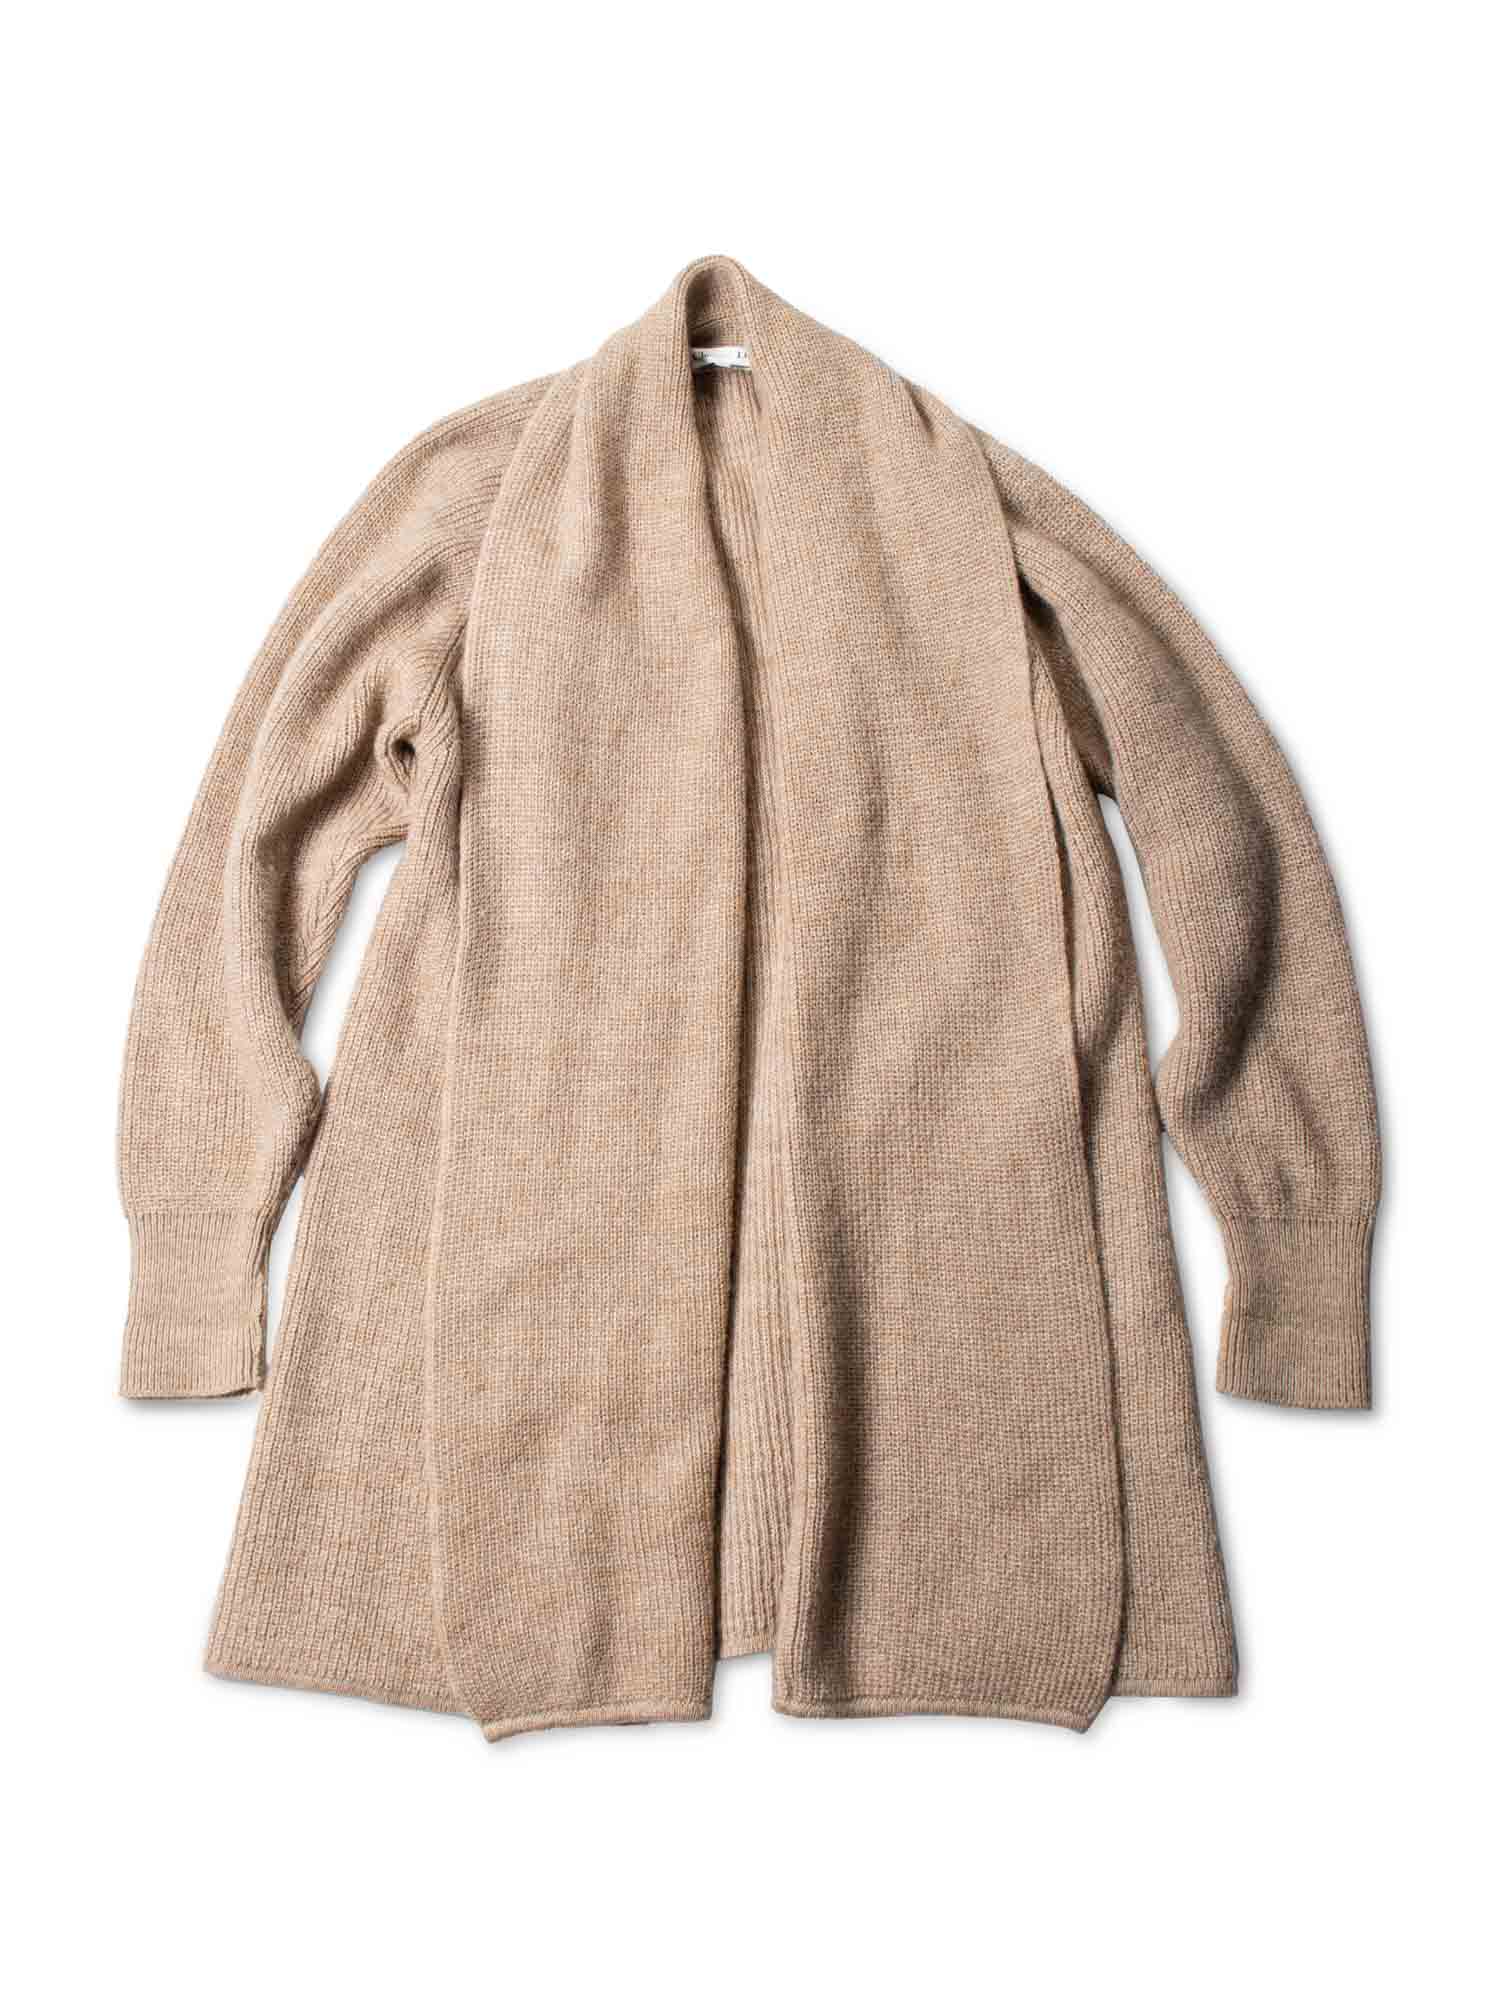 Christian Dior Knit Wool Alpaca Oversized Cardigan Beige-designer resale